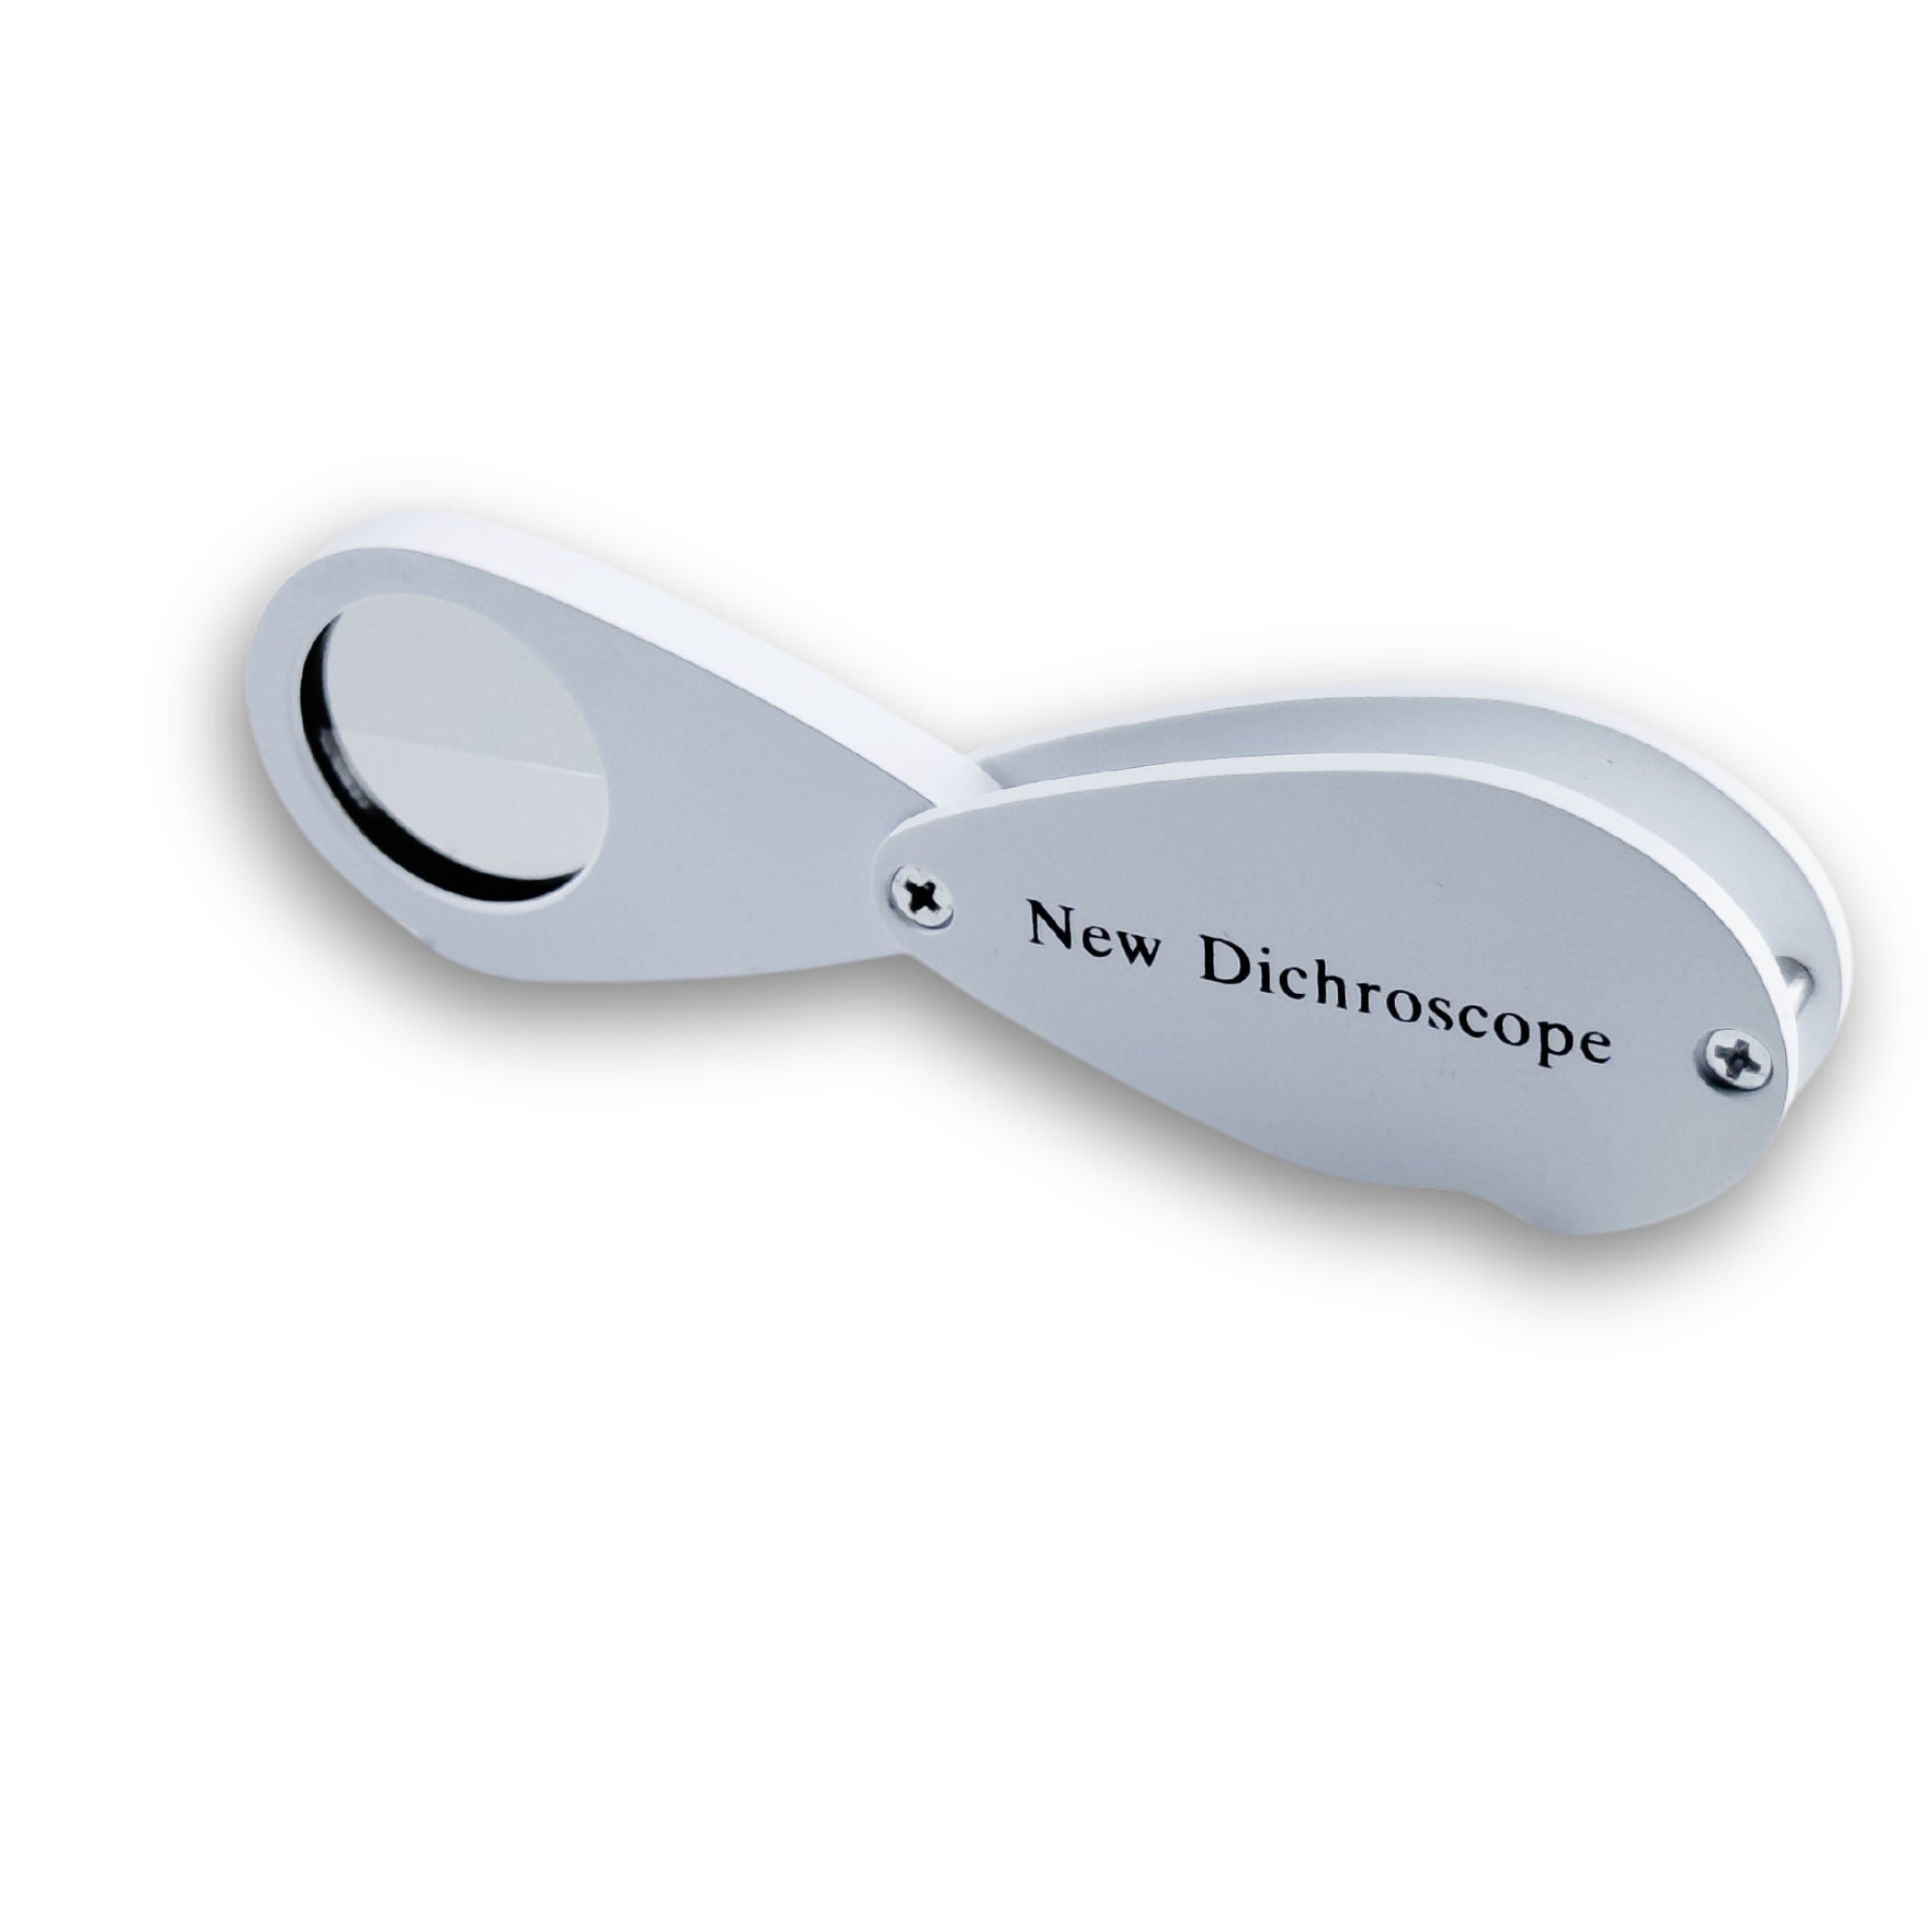 Dichroscope gemmologique